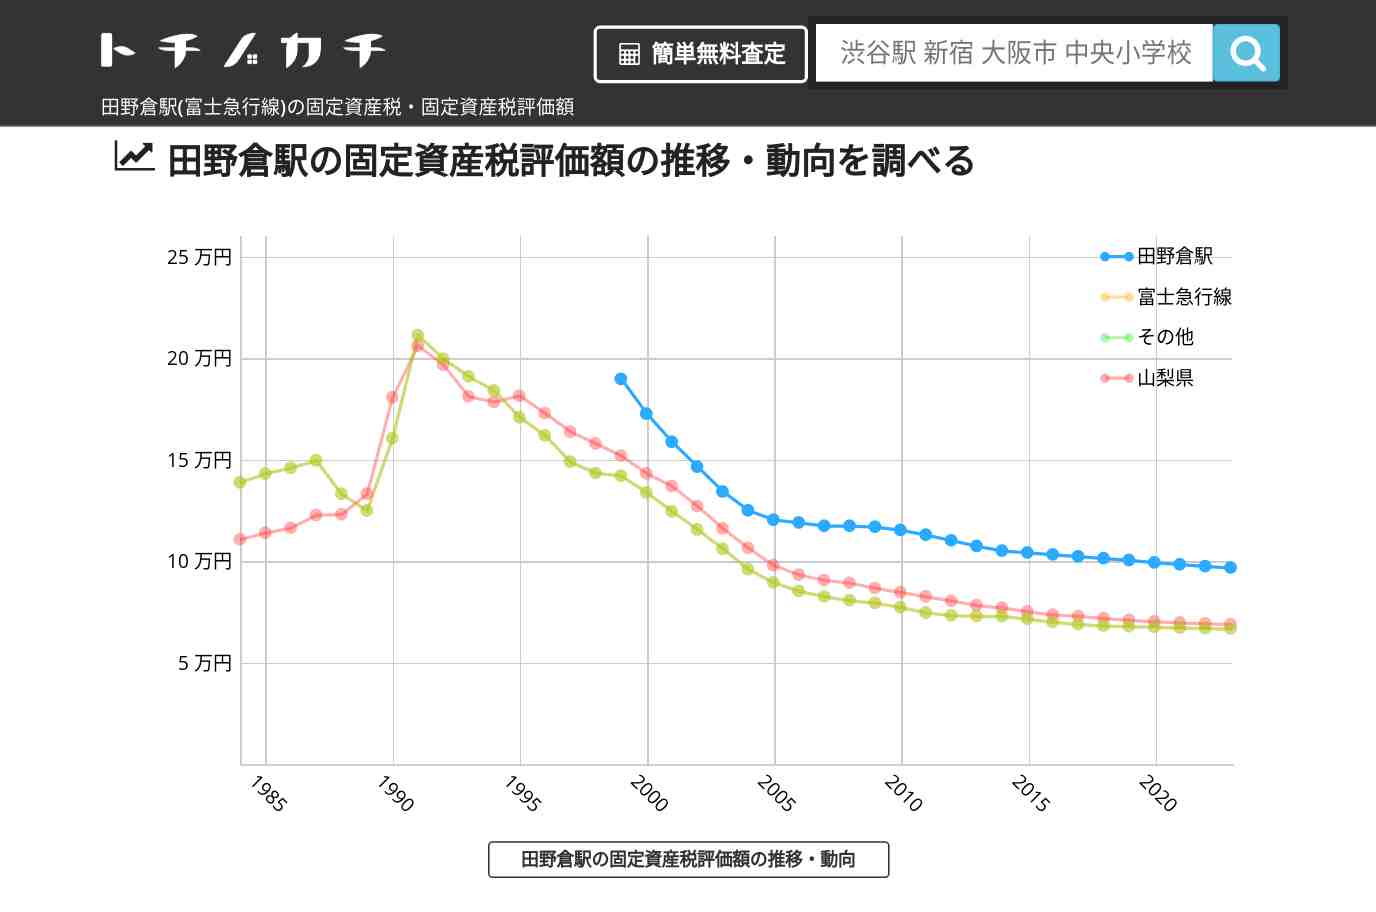 田野倉駅(富士急行線)の固定資産税・固定資産税評価額 | トチノカチ